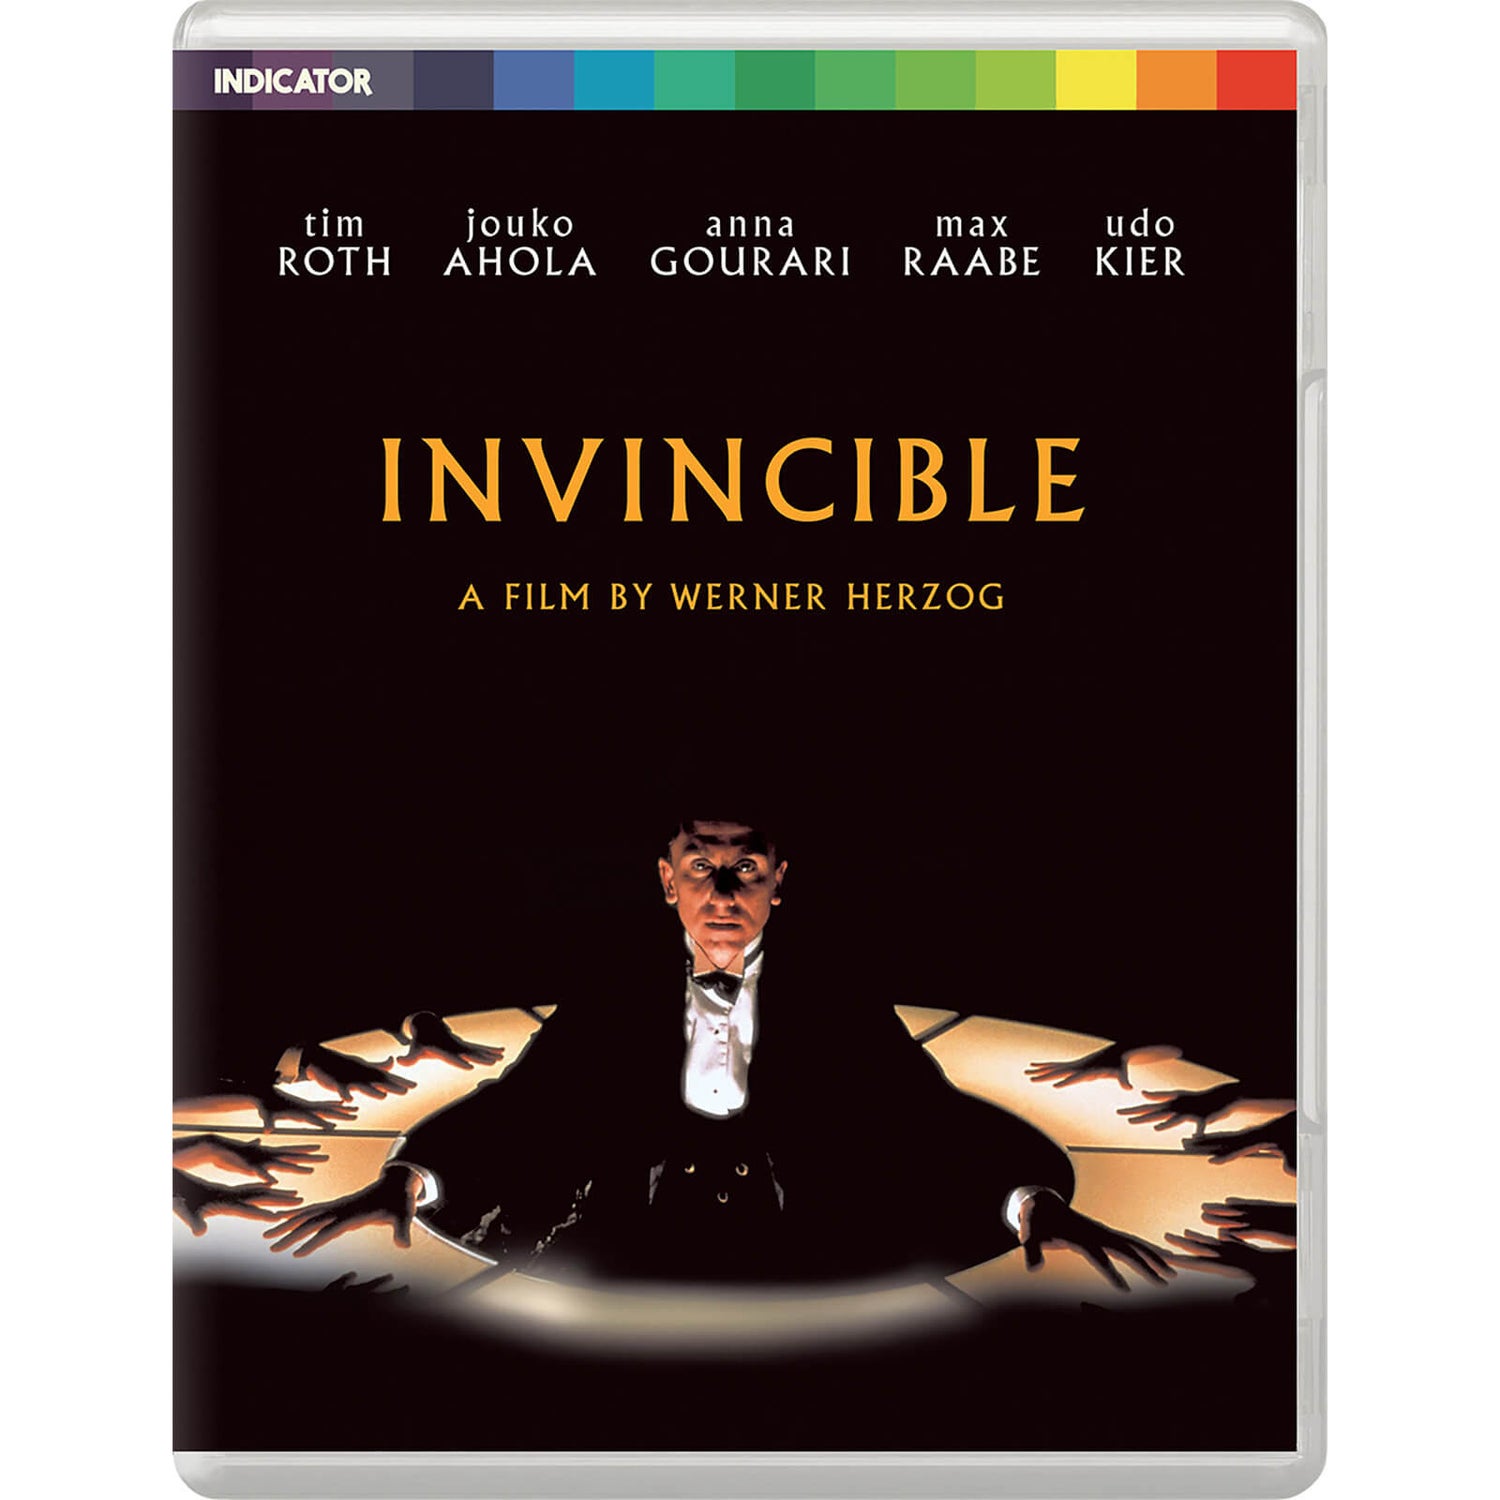 Invincible (Limited Edition)